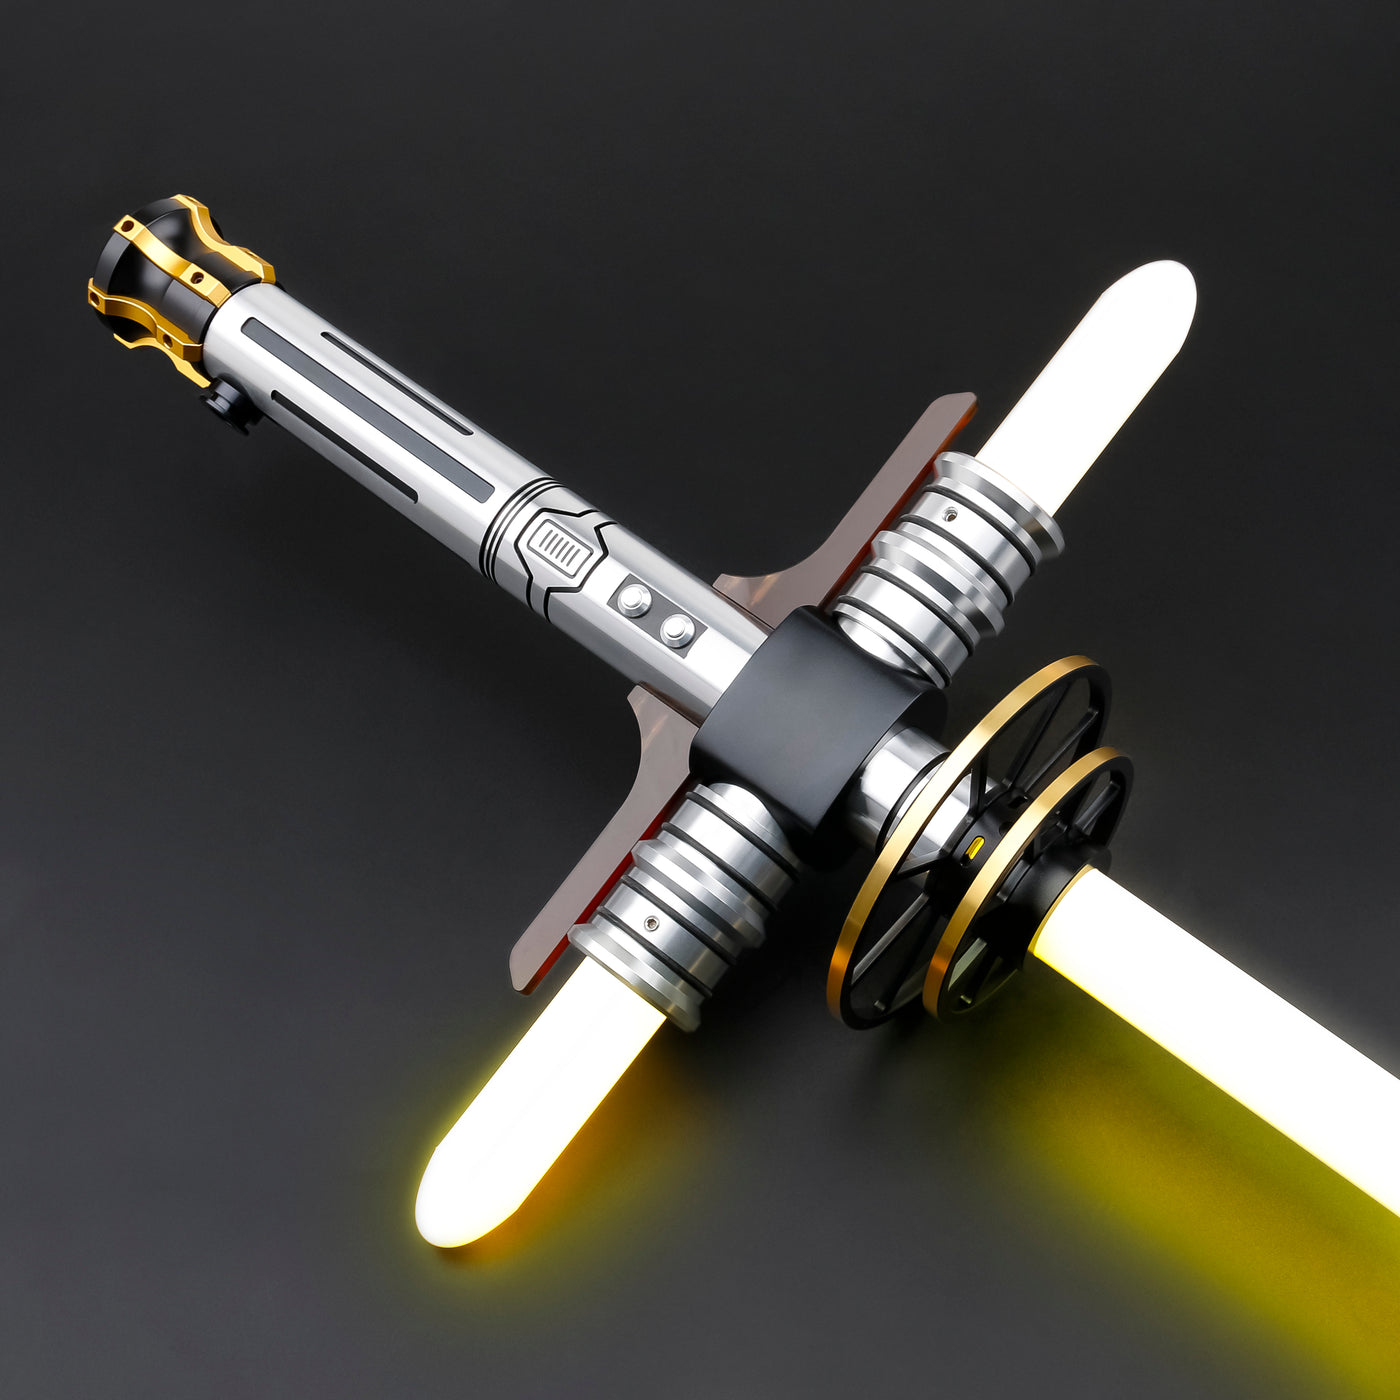 Celestial Guard - KenJo Sabers - Premium RGB Baselit - Star Wars Lightsaber replica Jedi Sith - Best sabershop Europe - Nederland light sabers kopen -